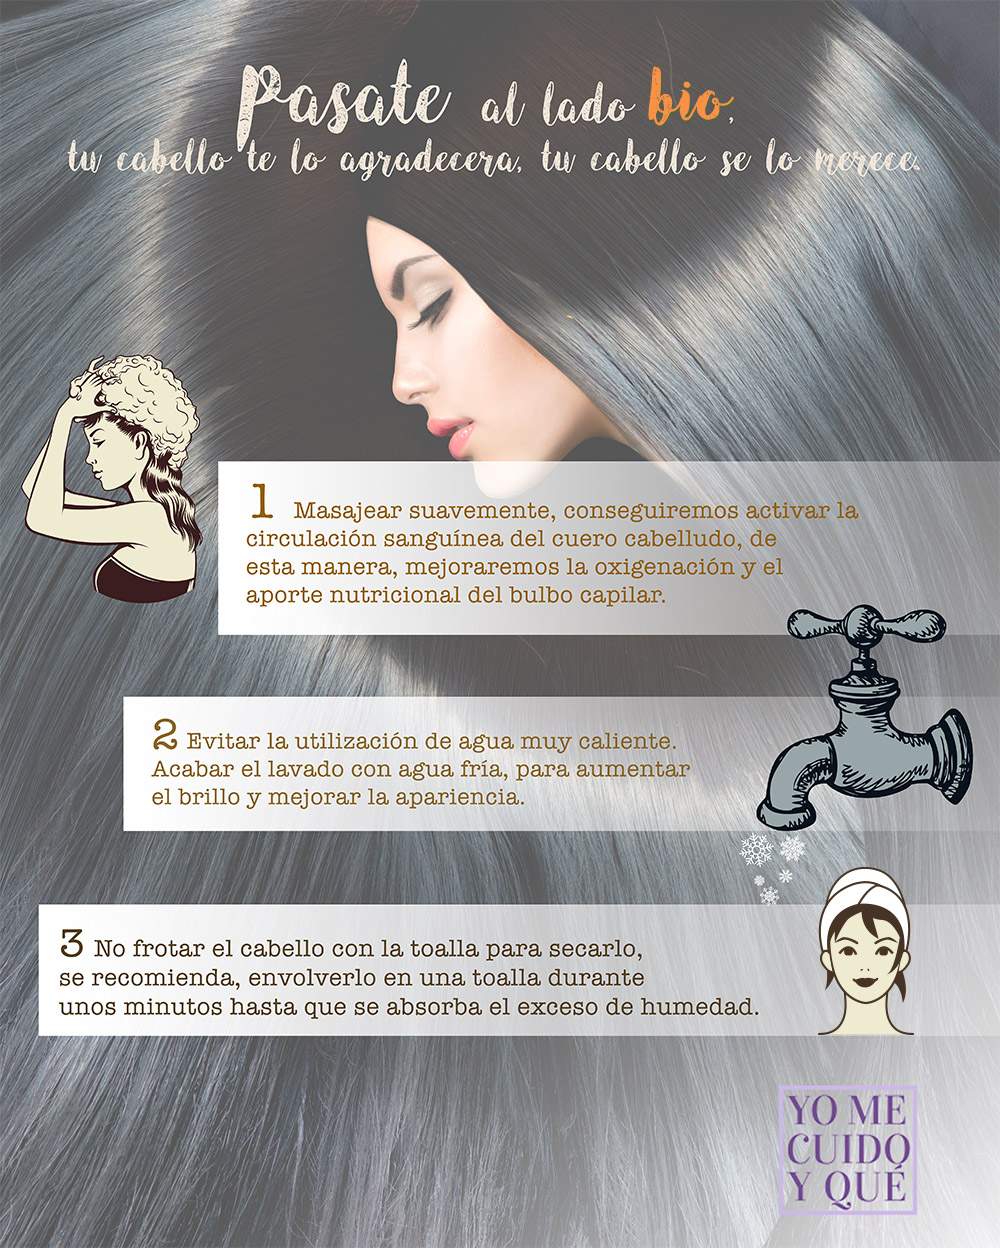 Infografia Yomecuido Consejos lavado cabello